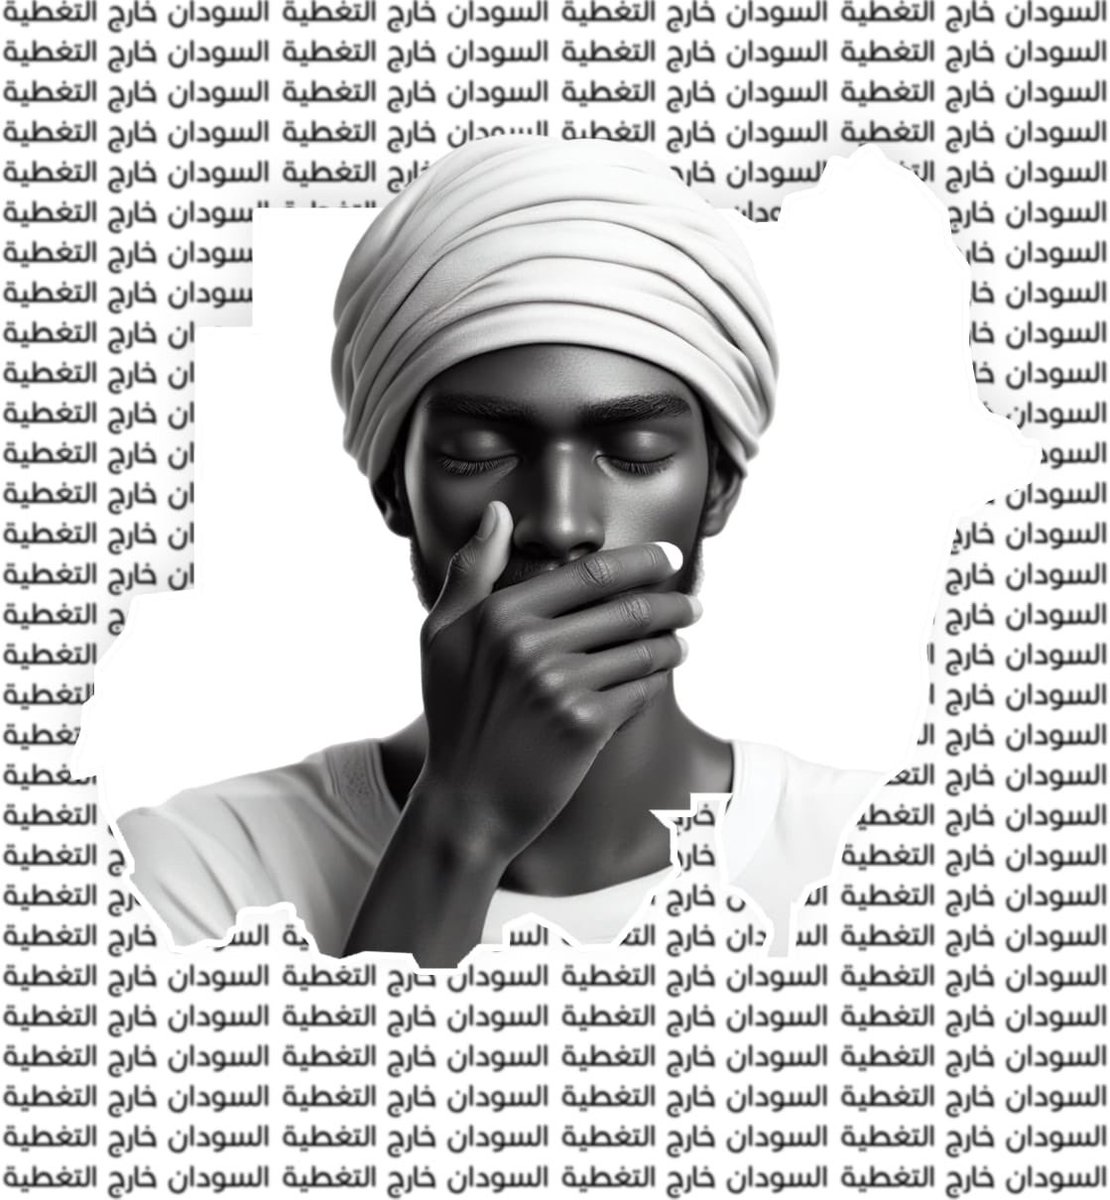 #Sudan
انقطاع شبكات الاتصالات والإنترنت لليوم الثالث على التوالي ❗️
سكوت إنهم يُجهزون على الشعب #السوداني 💔
   #PeopleHelpingPeople
#KeepEyesOnSudan 
#Sudan_War_Updates
#sudanGenocide
#السودانيون_يستحقون_السلام
#السودان_خارج_التغطية_الإعلامية
#SudanNews
#StoptheGenocideNow